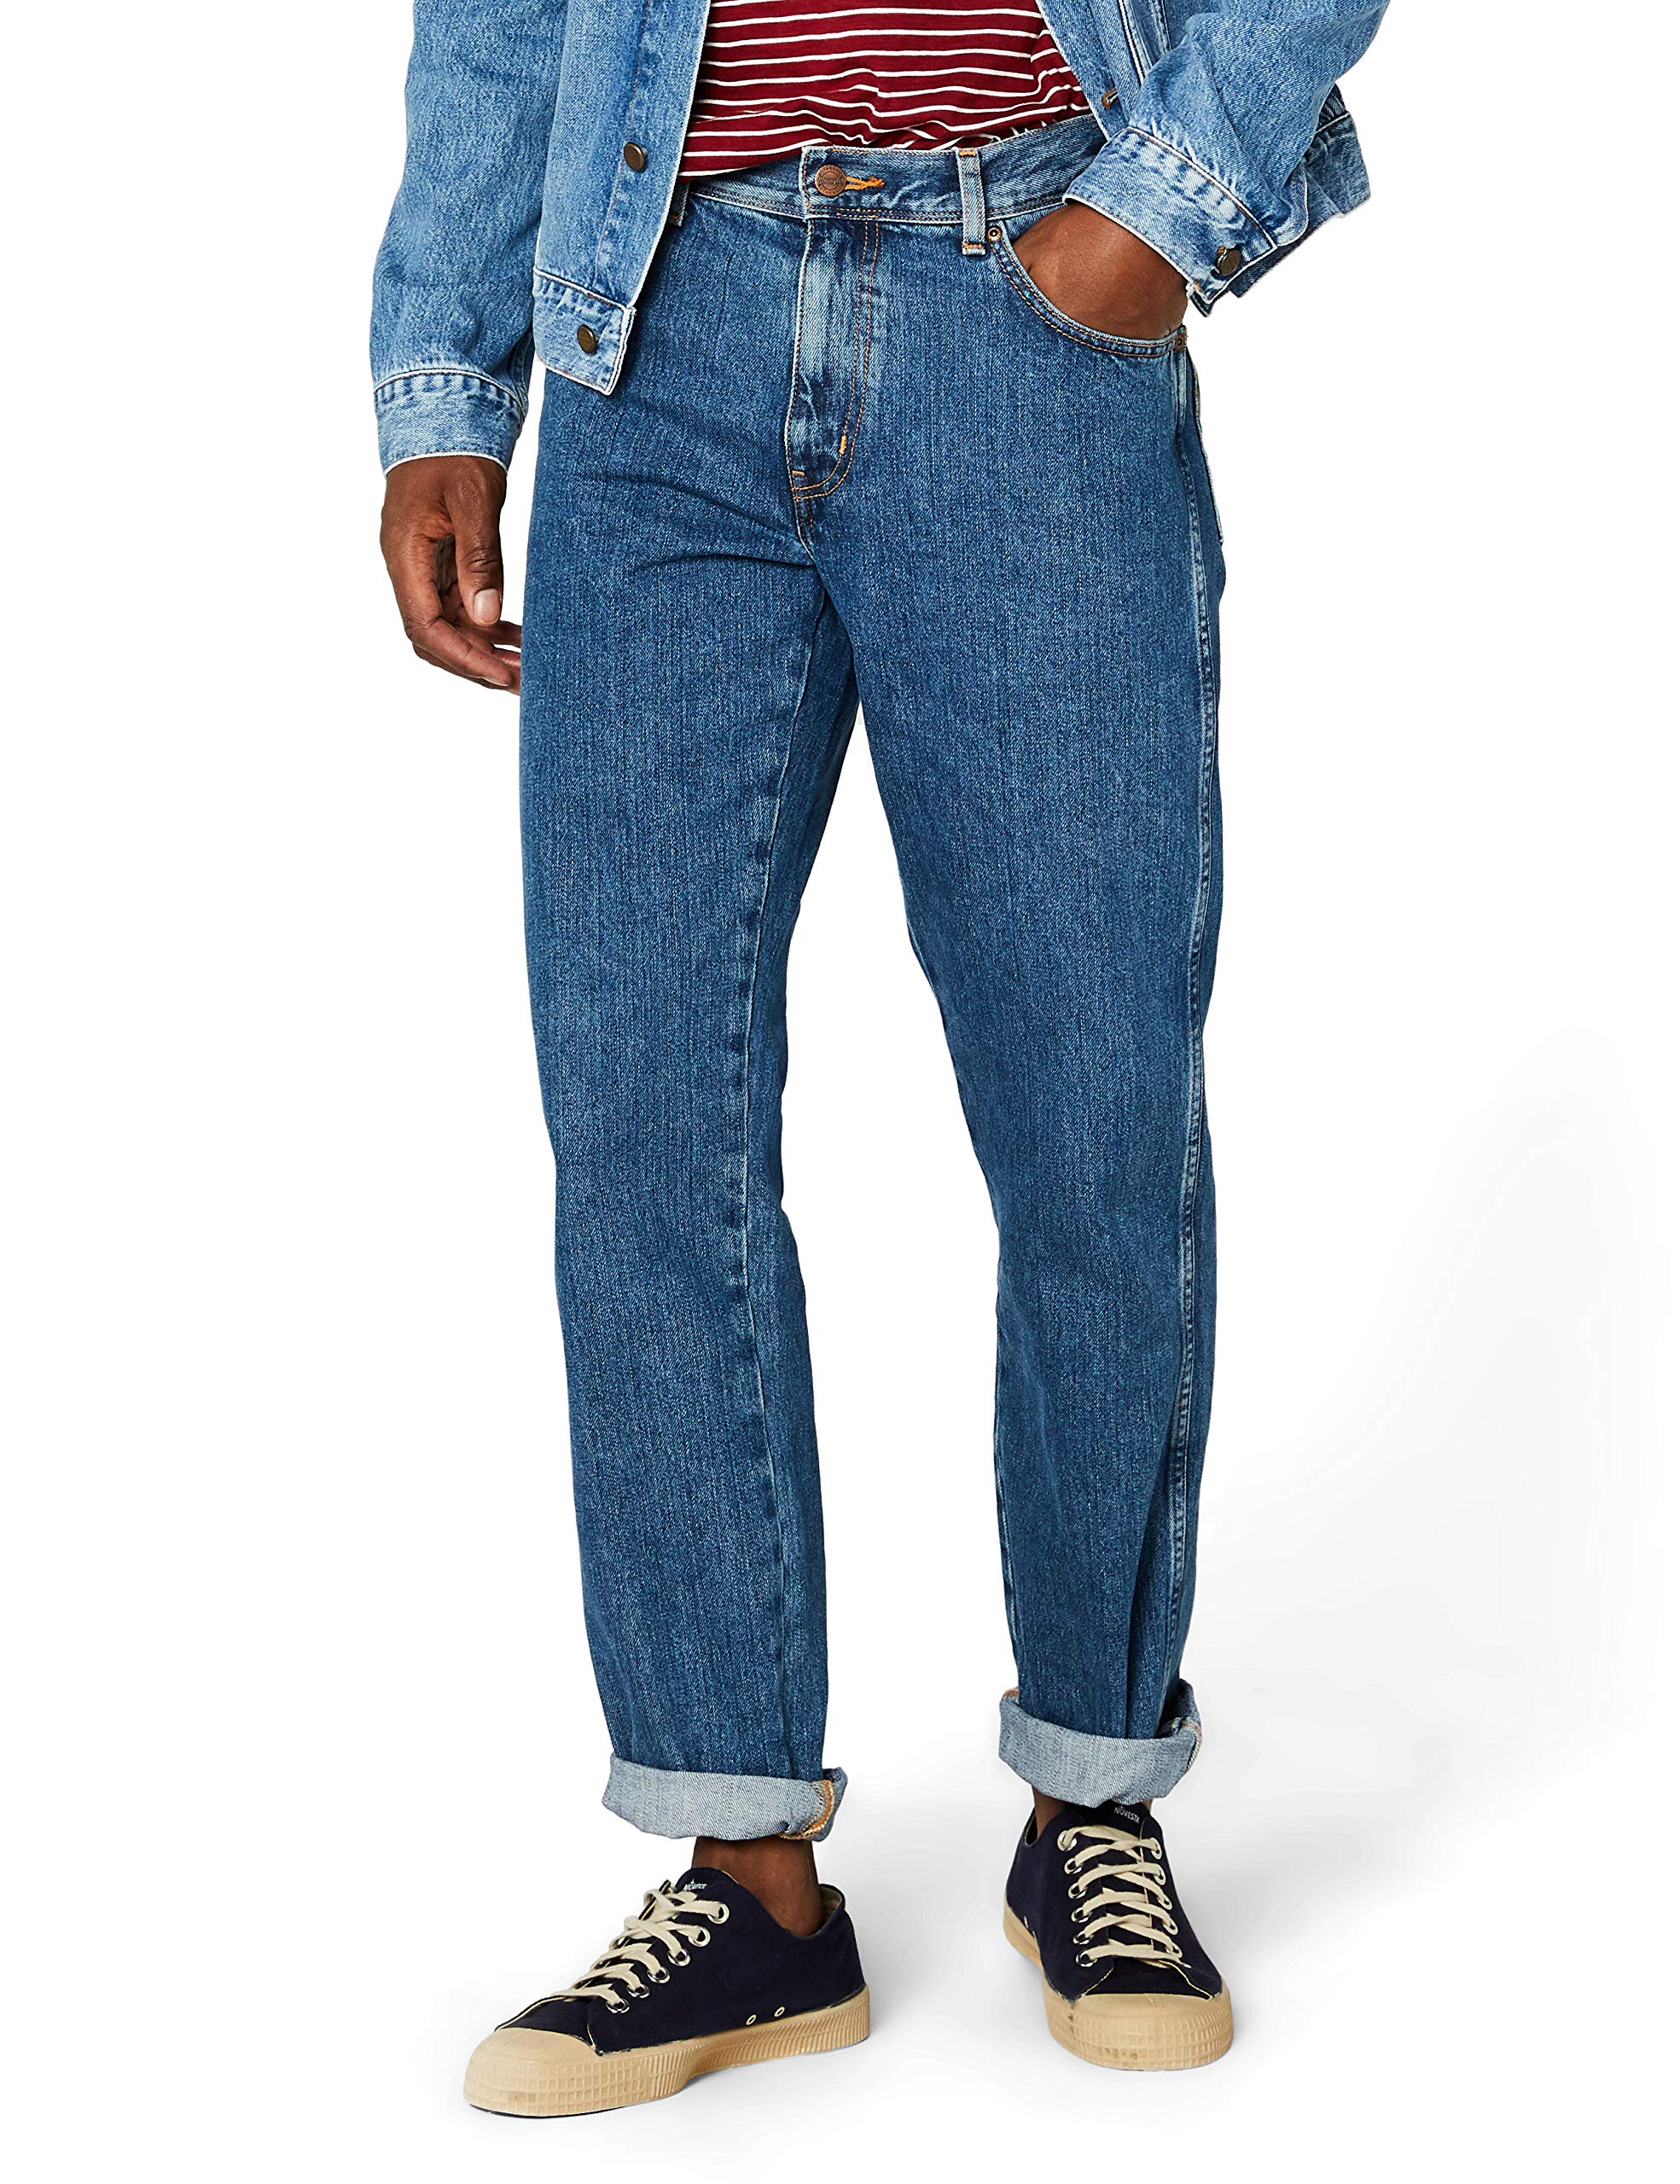 Wrangler Herren Texas 821 Authentic Straight Jeans, Vintage Stonewash, 31W / 32L